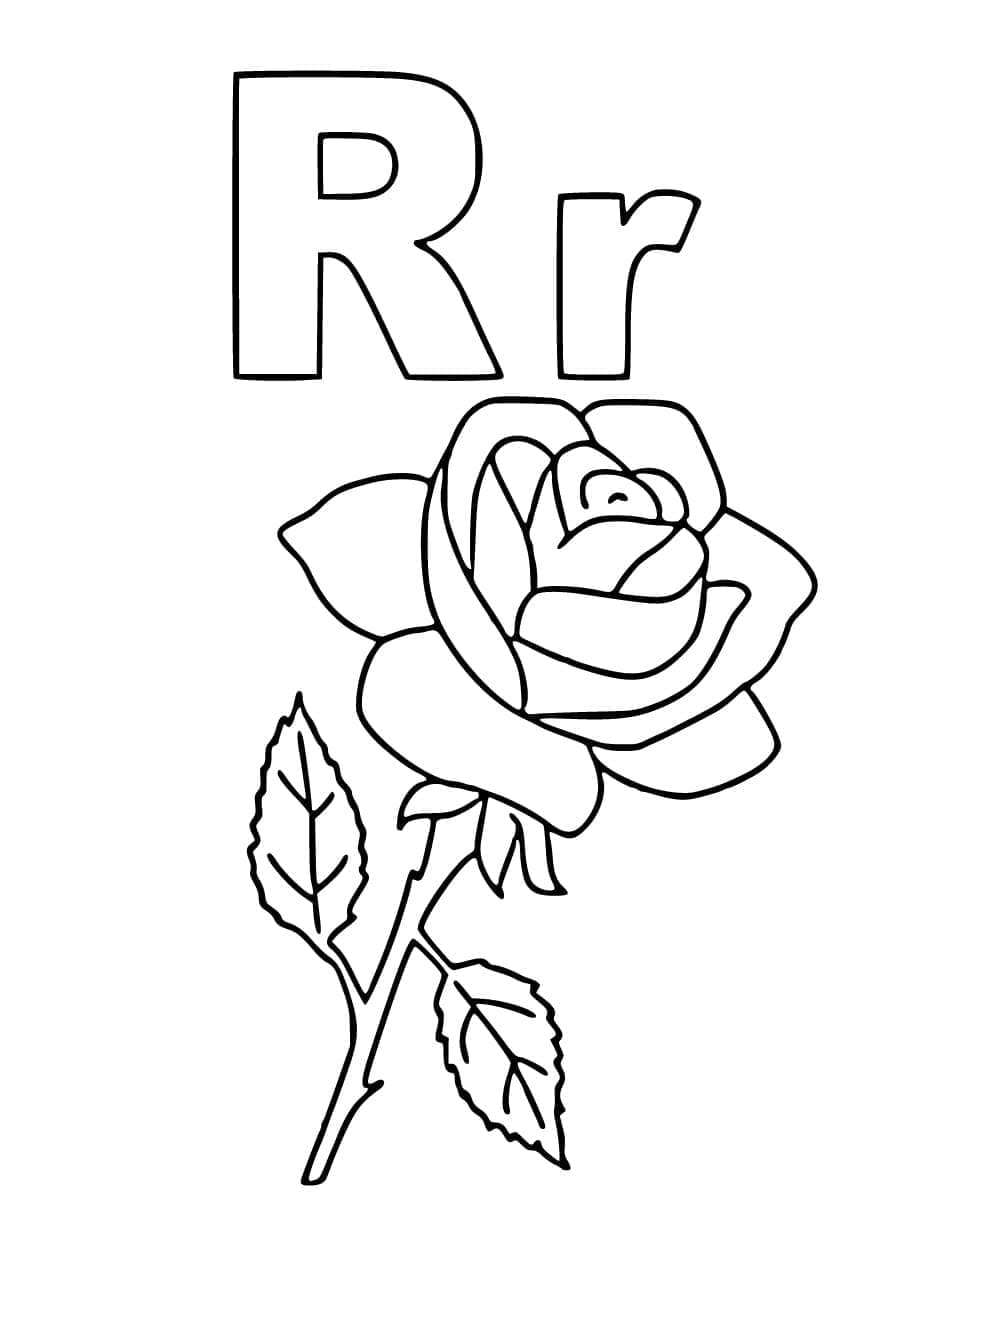 Kolorowanka Litera R jak Róża